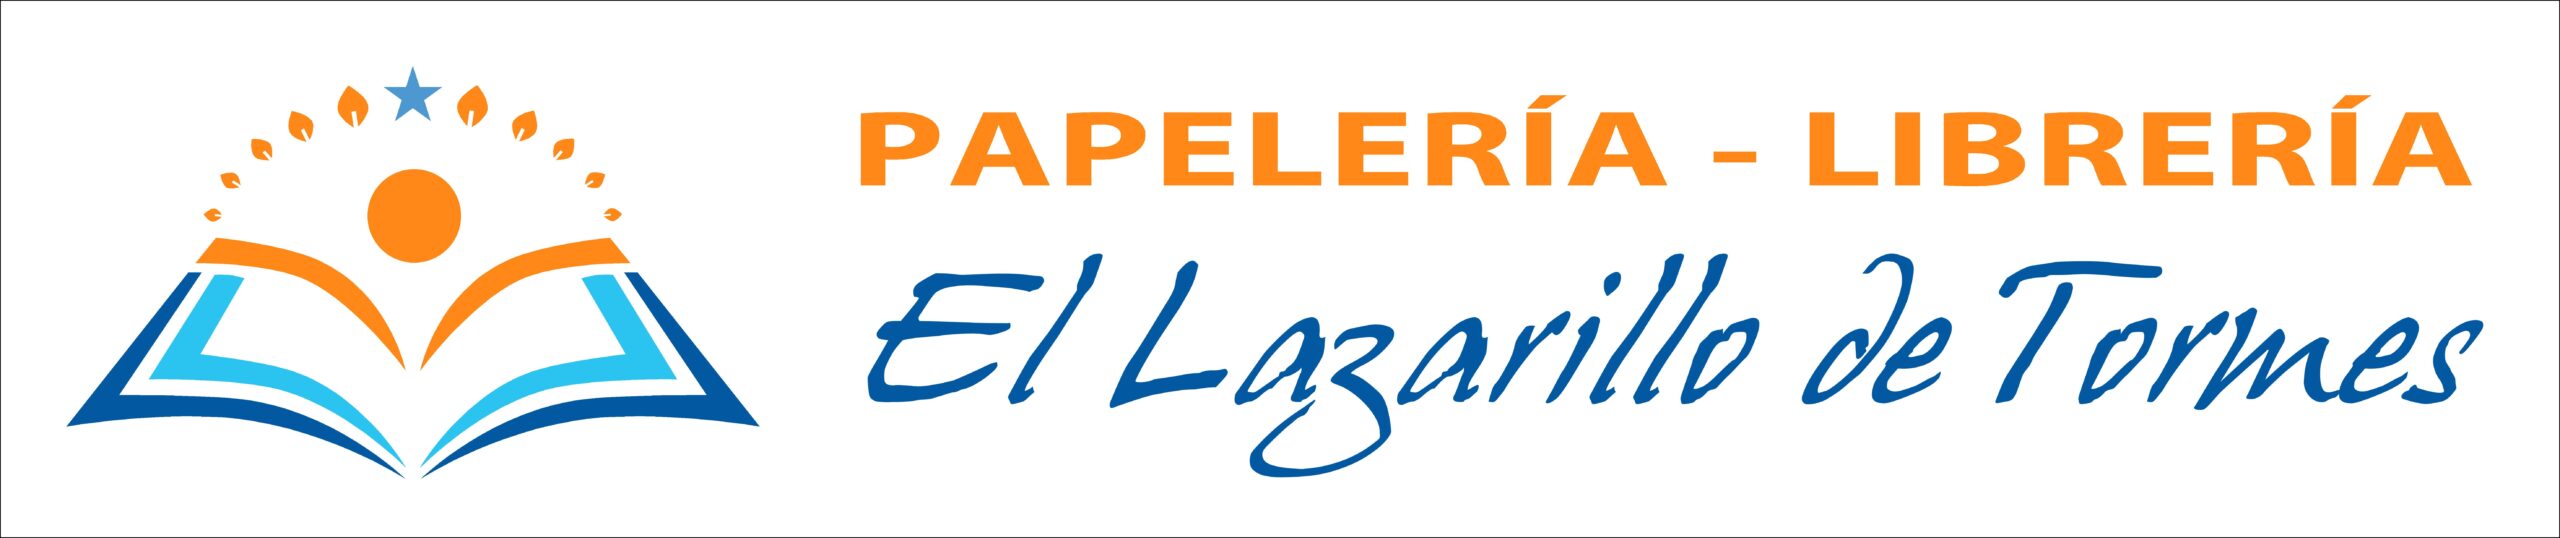 logo lazarillo - El_Lazarillo Papel-Lib-EspacioCultural